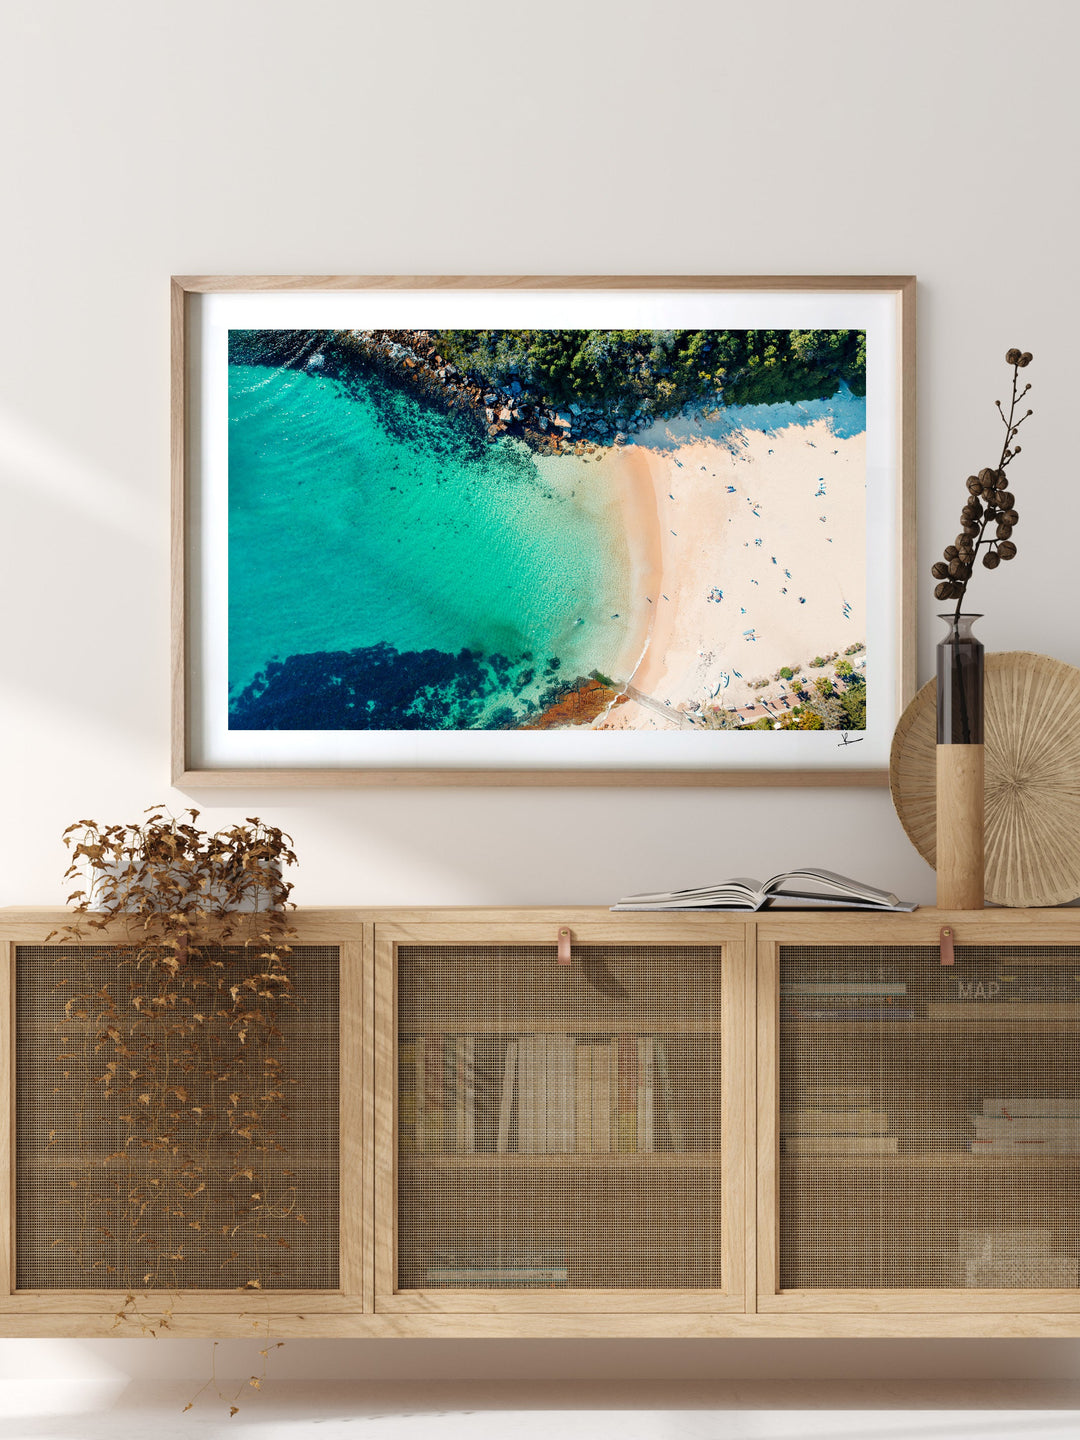 Shelly Beach 01 - Australia Unseen - Wall Art Print